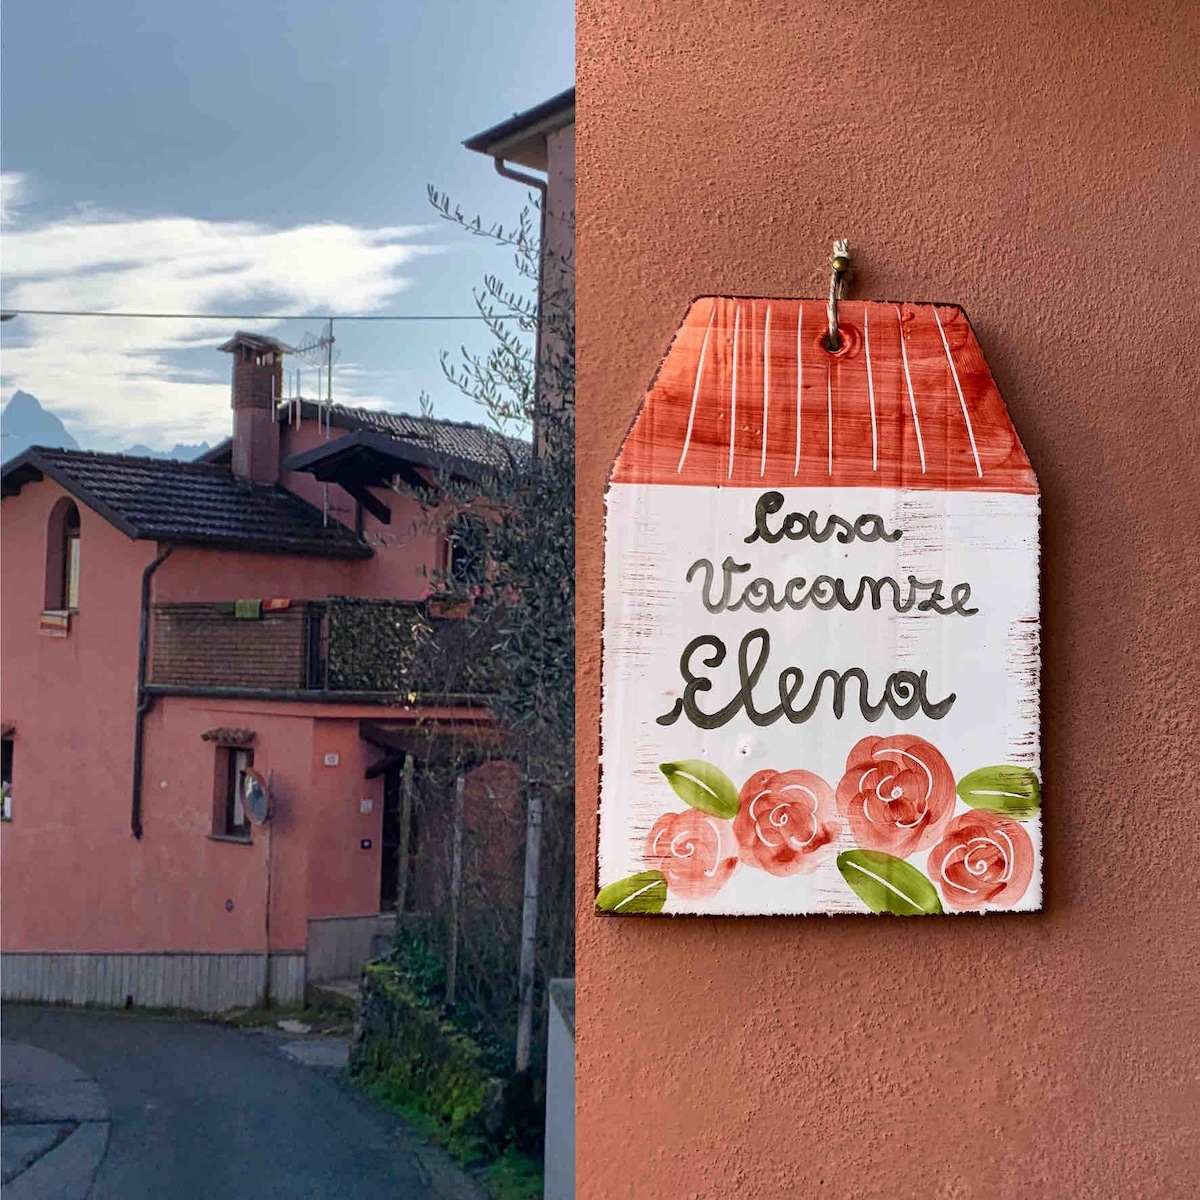 Ceserano Vacation Rentals & Homes - Tuscany, Italy | Airbnb